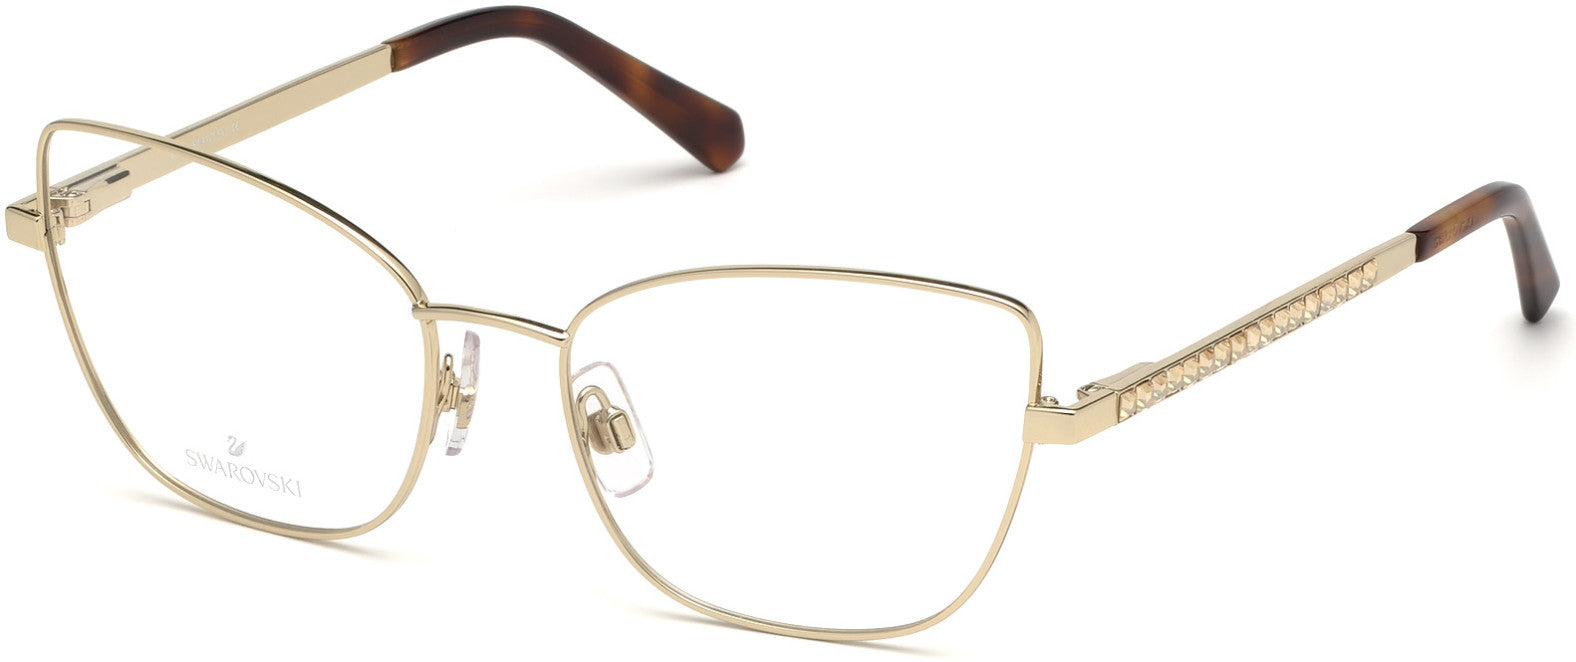 Swarovski SK5287 Butterfly Eyeglasses 032-032 - Pale Gold